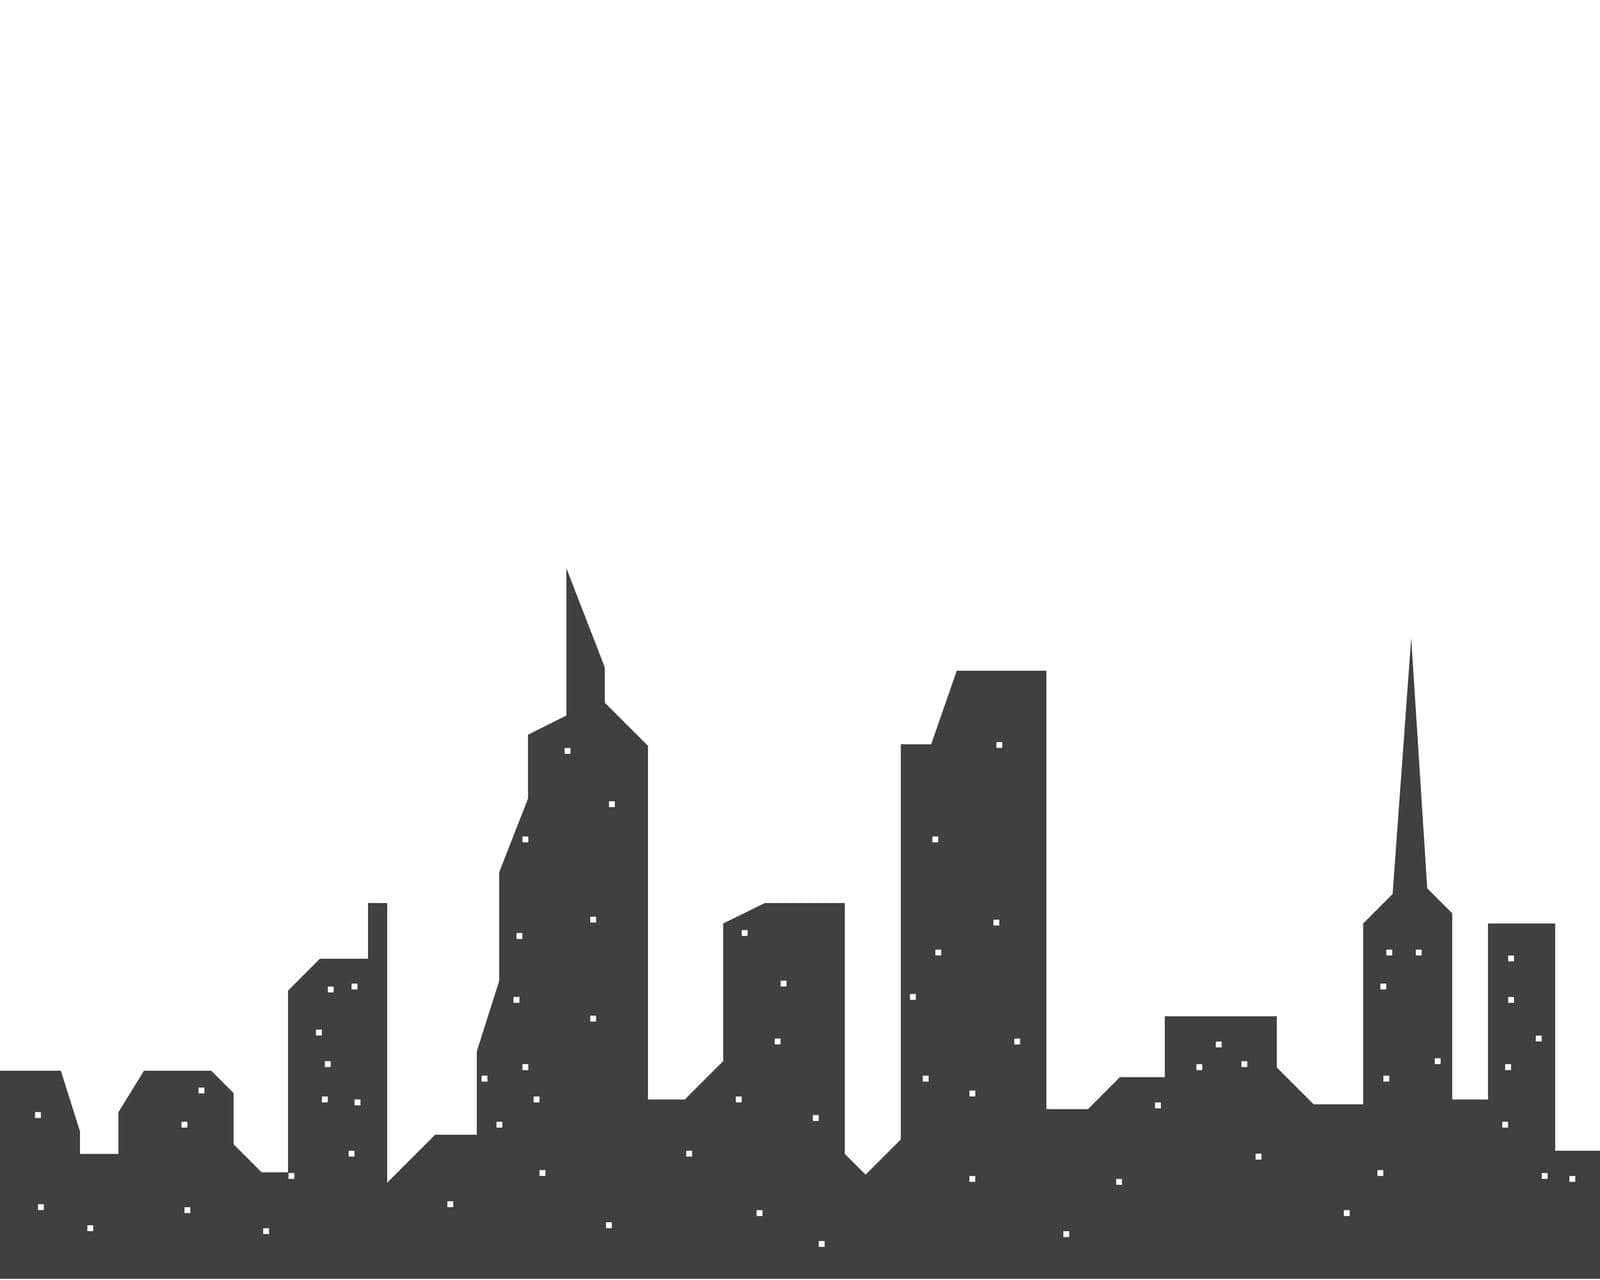 modern city skyline vector landscape illustration